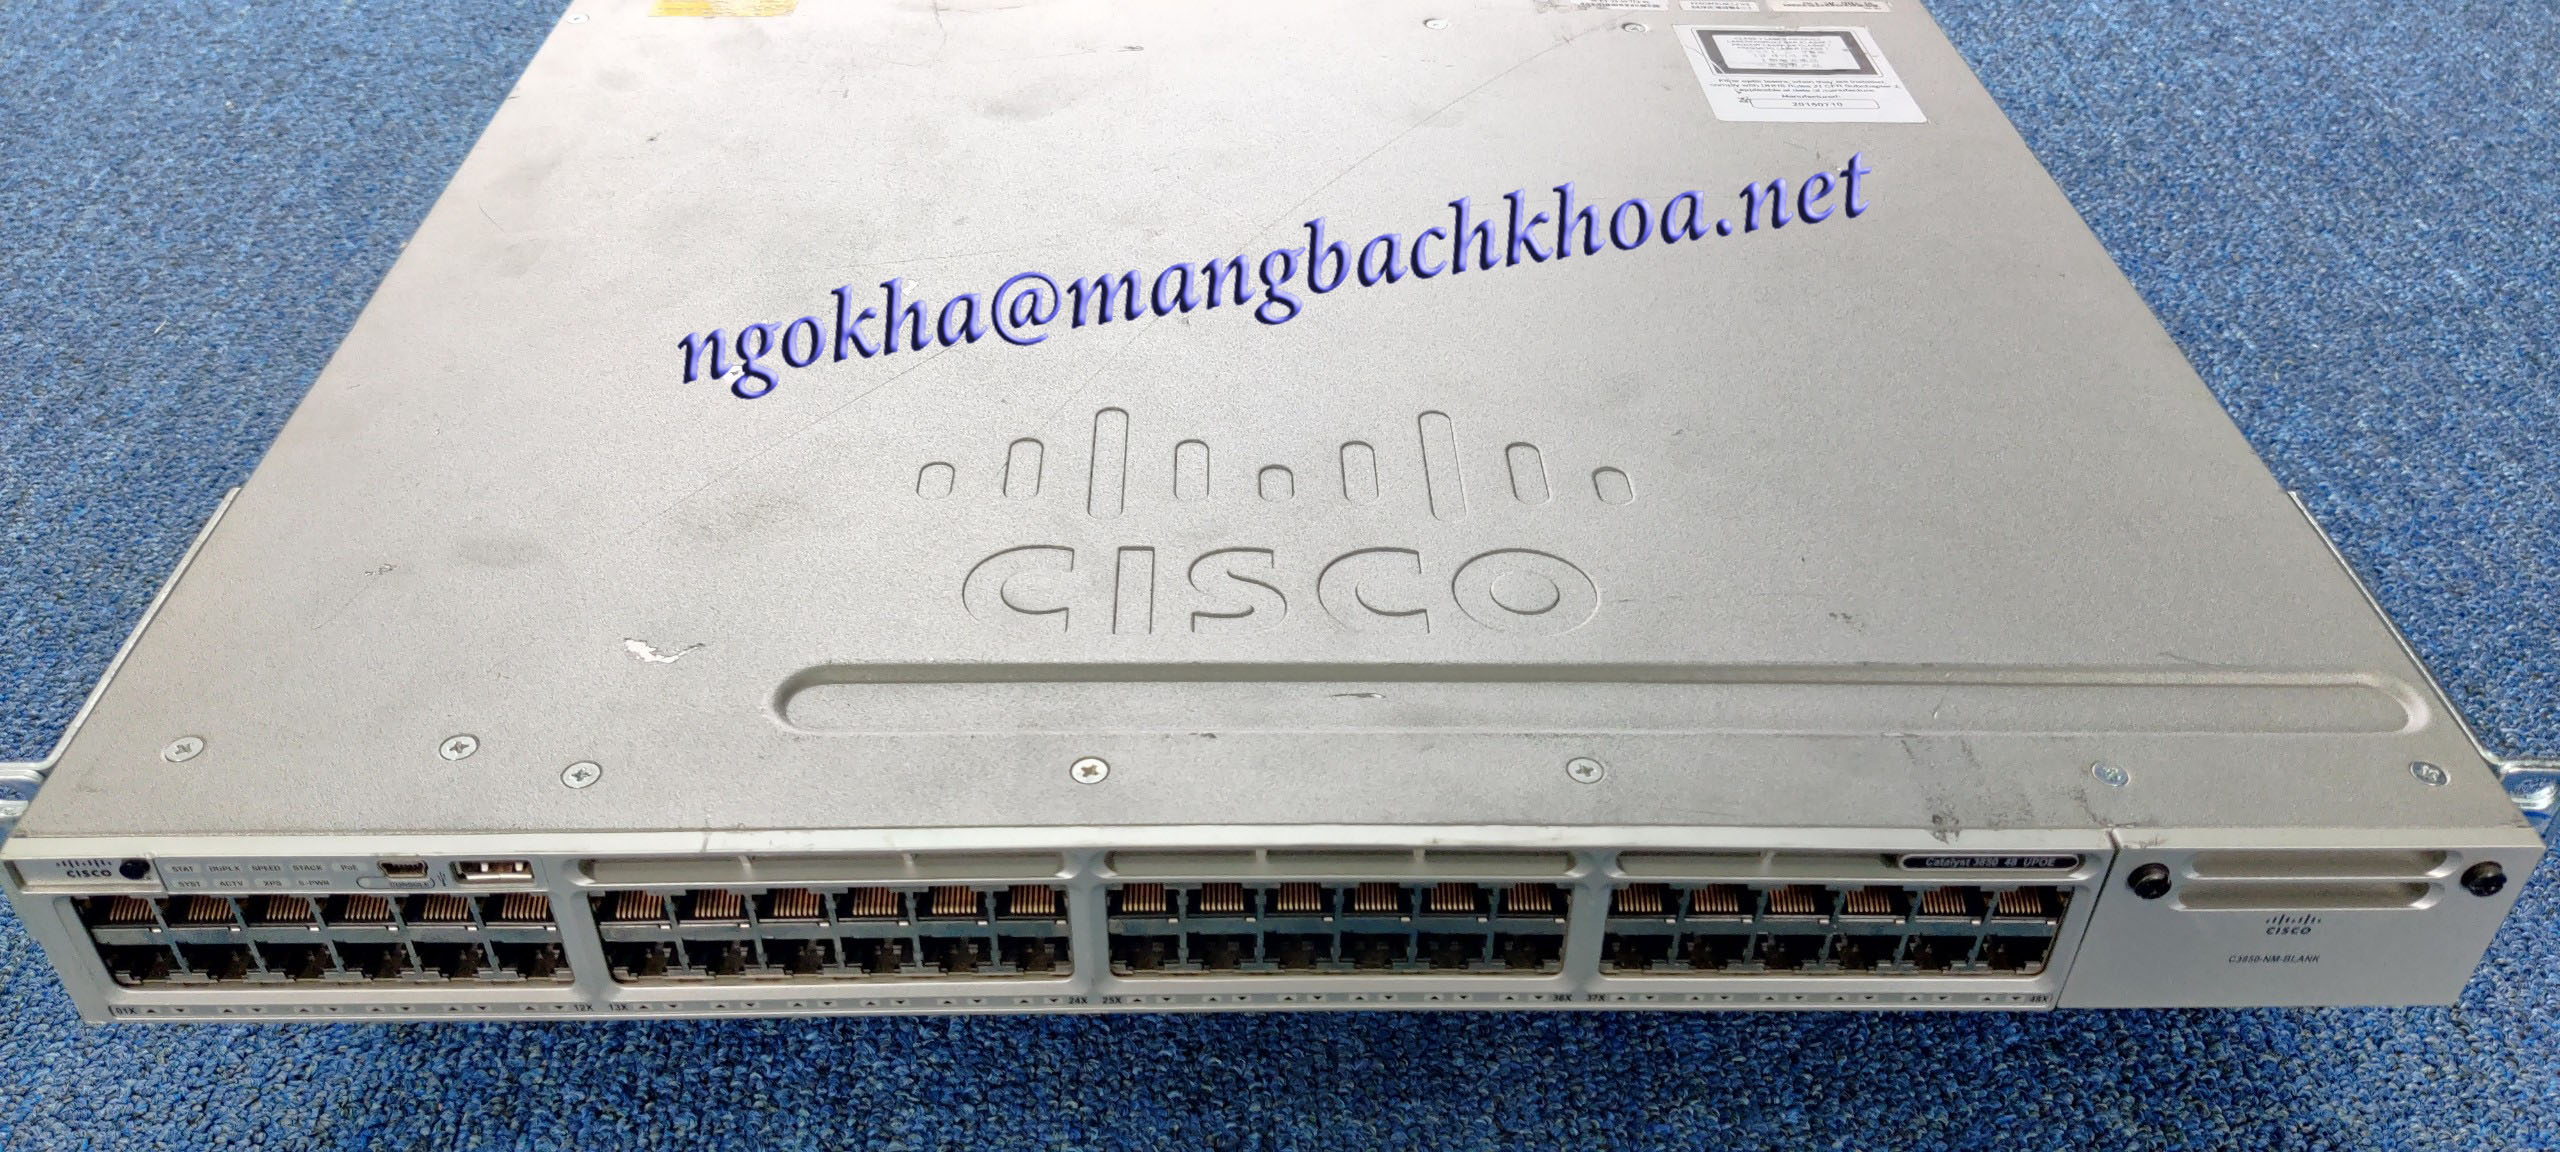 Cisco Wireless